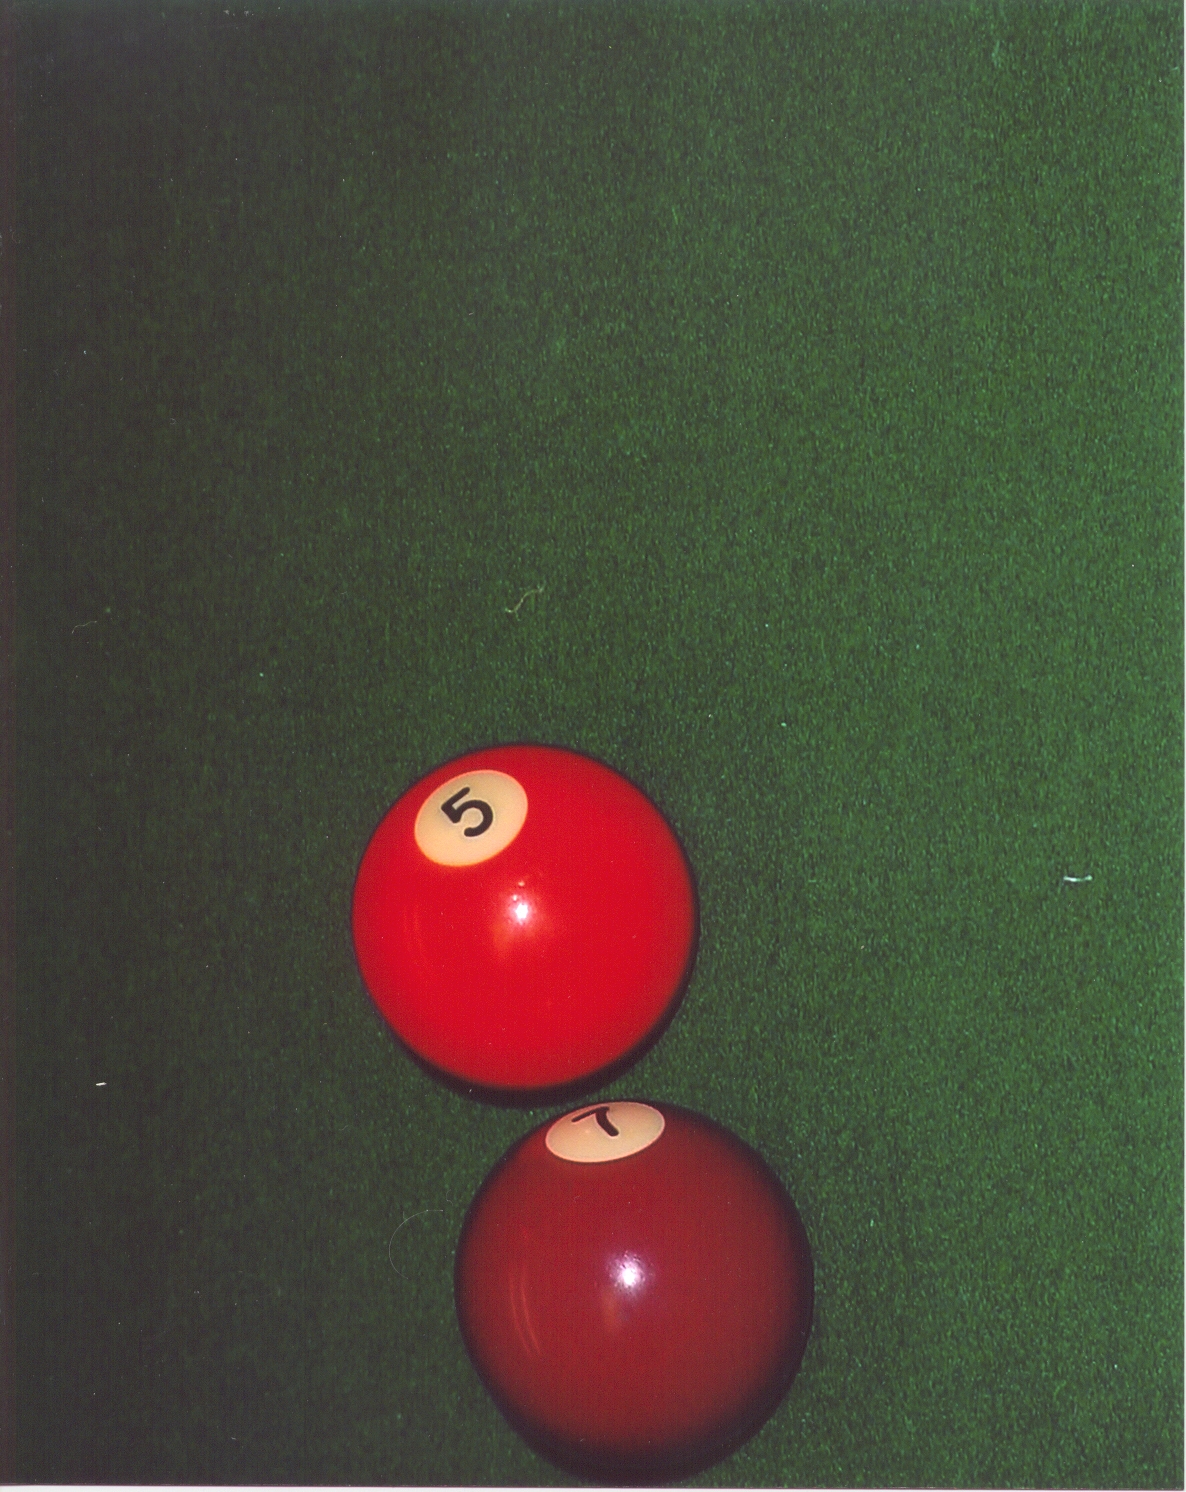 pool balls colliding